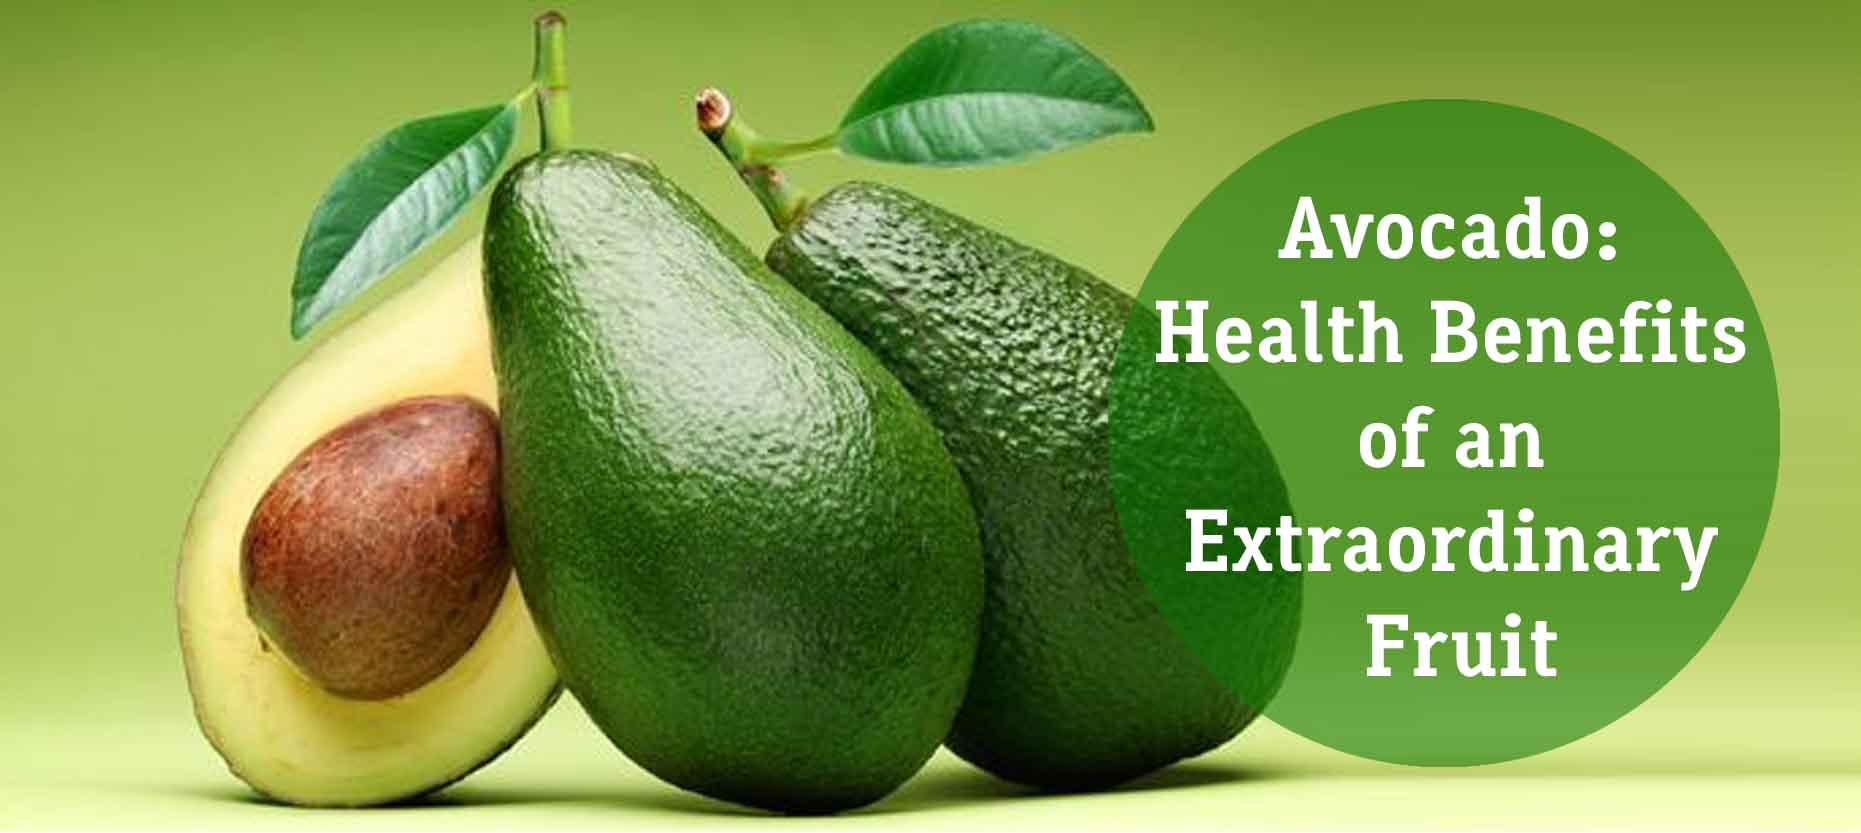 Top 5 Health Benefits of Avocado